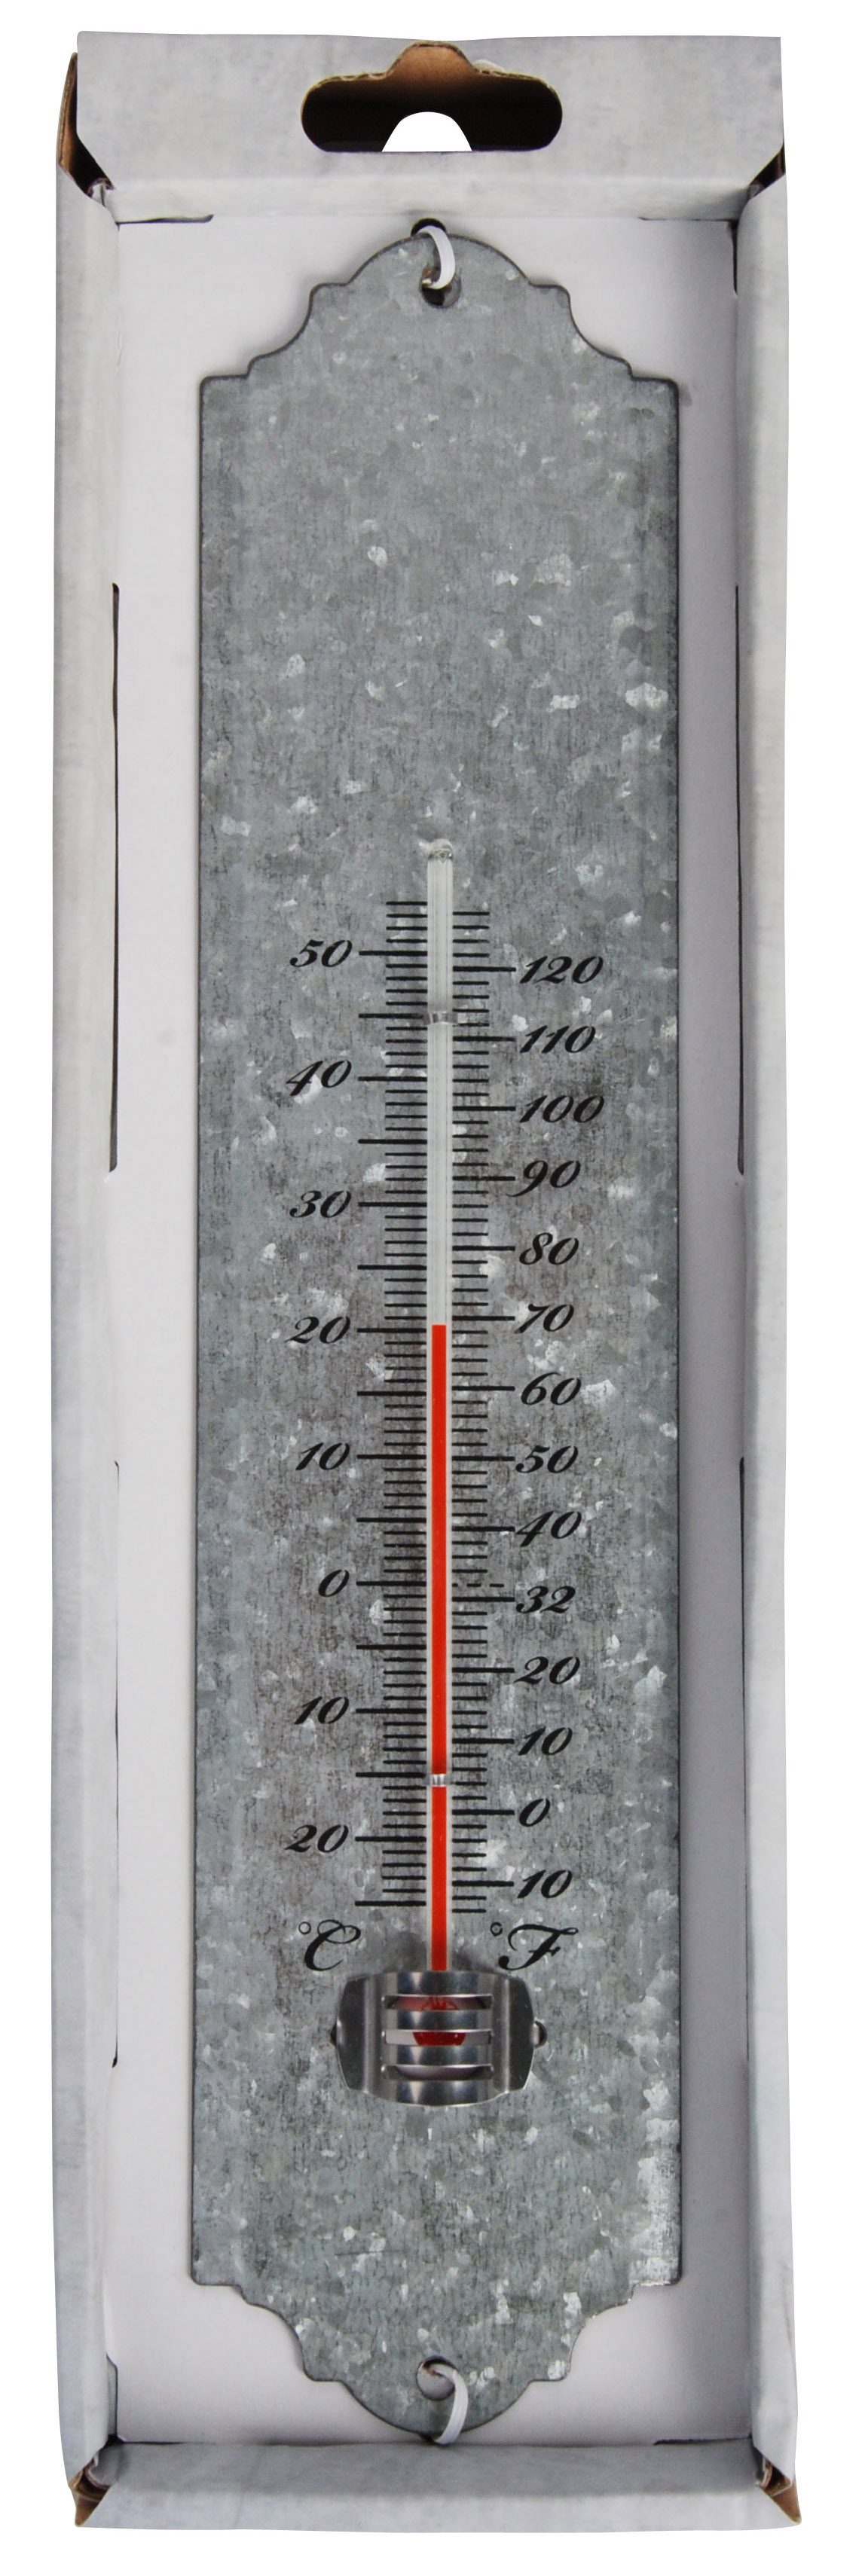 Vente grand thermomètre pas cher en Zinc - Thermomètre de Jardin original